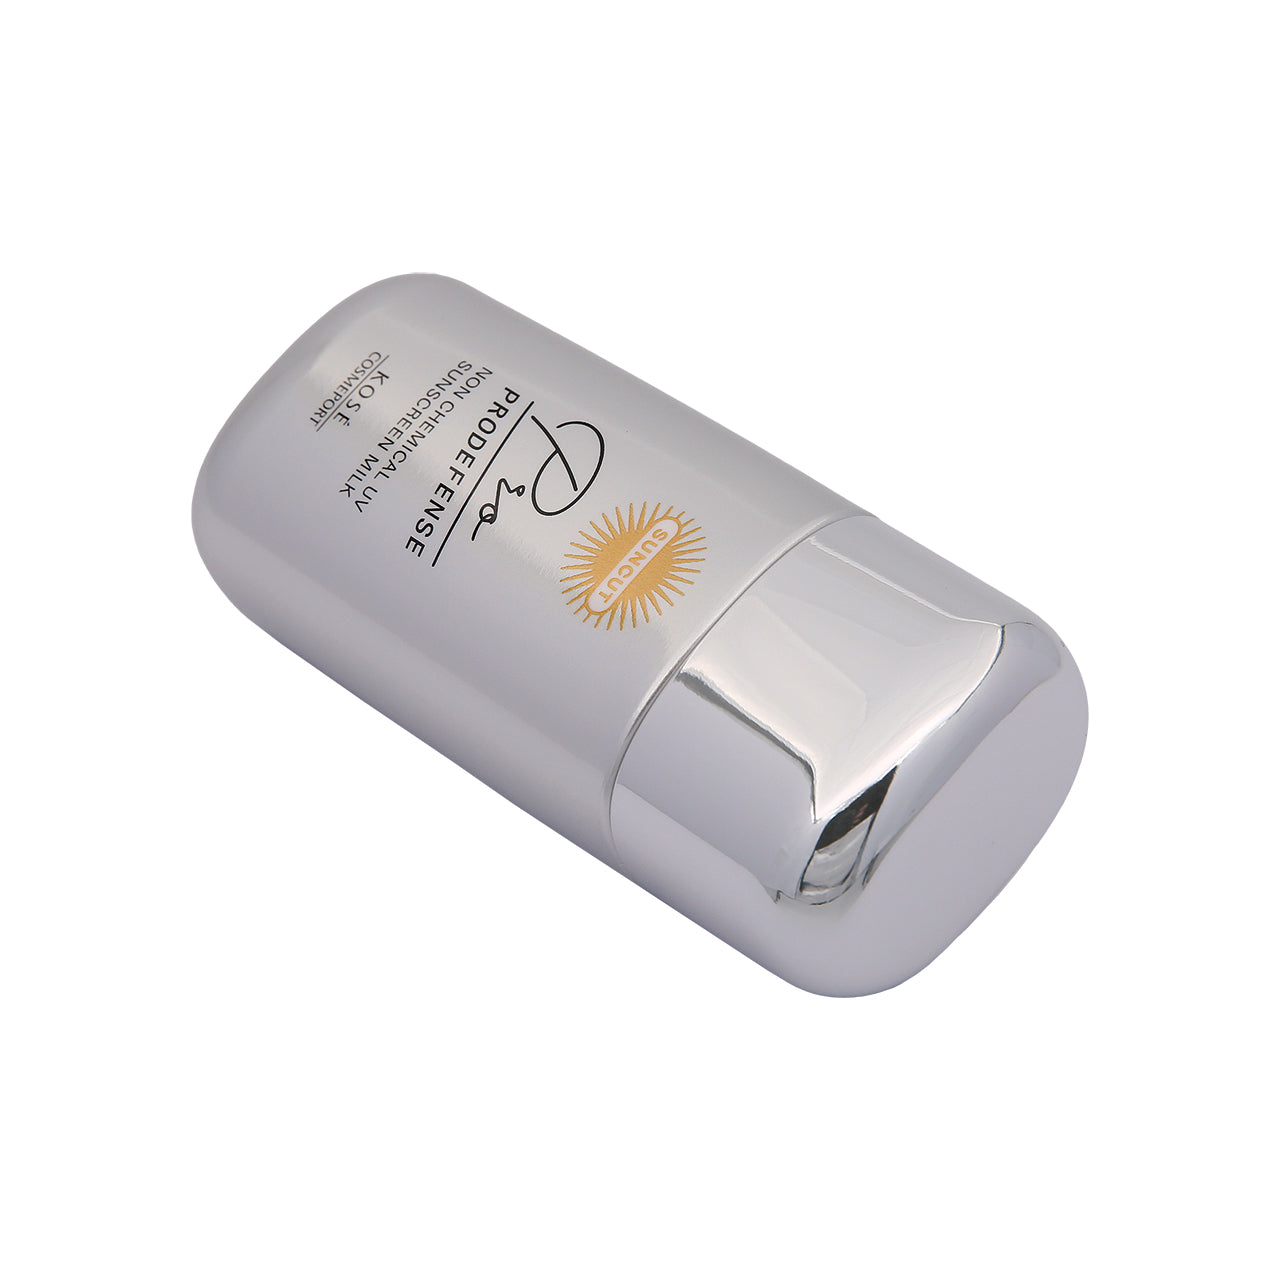 Kose Cosmeport Suncut Prodefense Non Chemical UV Suncreen Milk SPF50+ PA++++ 60ml | Sasa Global eShop